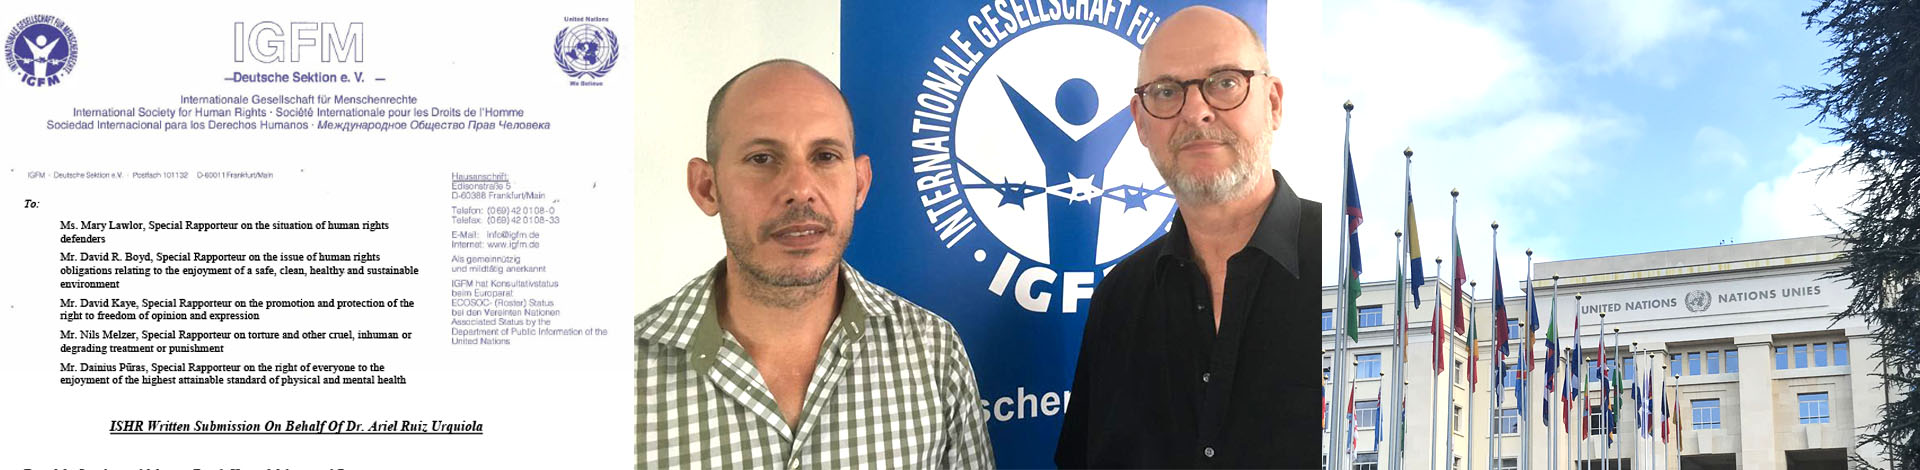 IGFM has filed a complaint against Cuba with the UN Human Rights Council